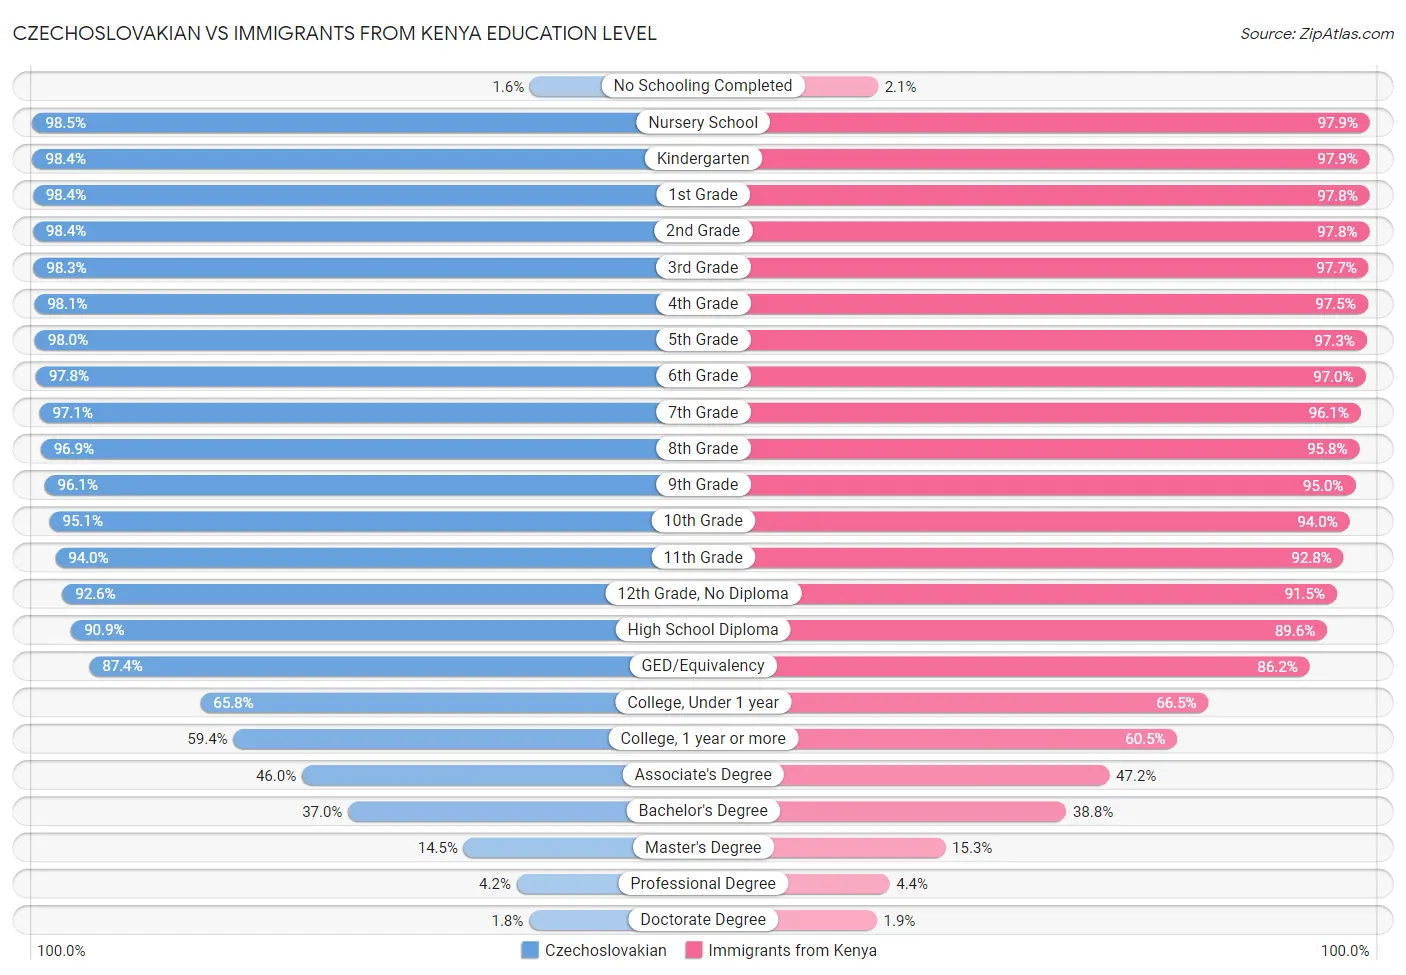 Czechoslovakian vs Immigrants from Kenya Education Level